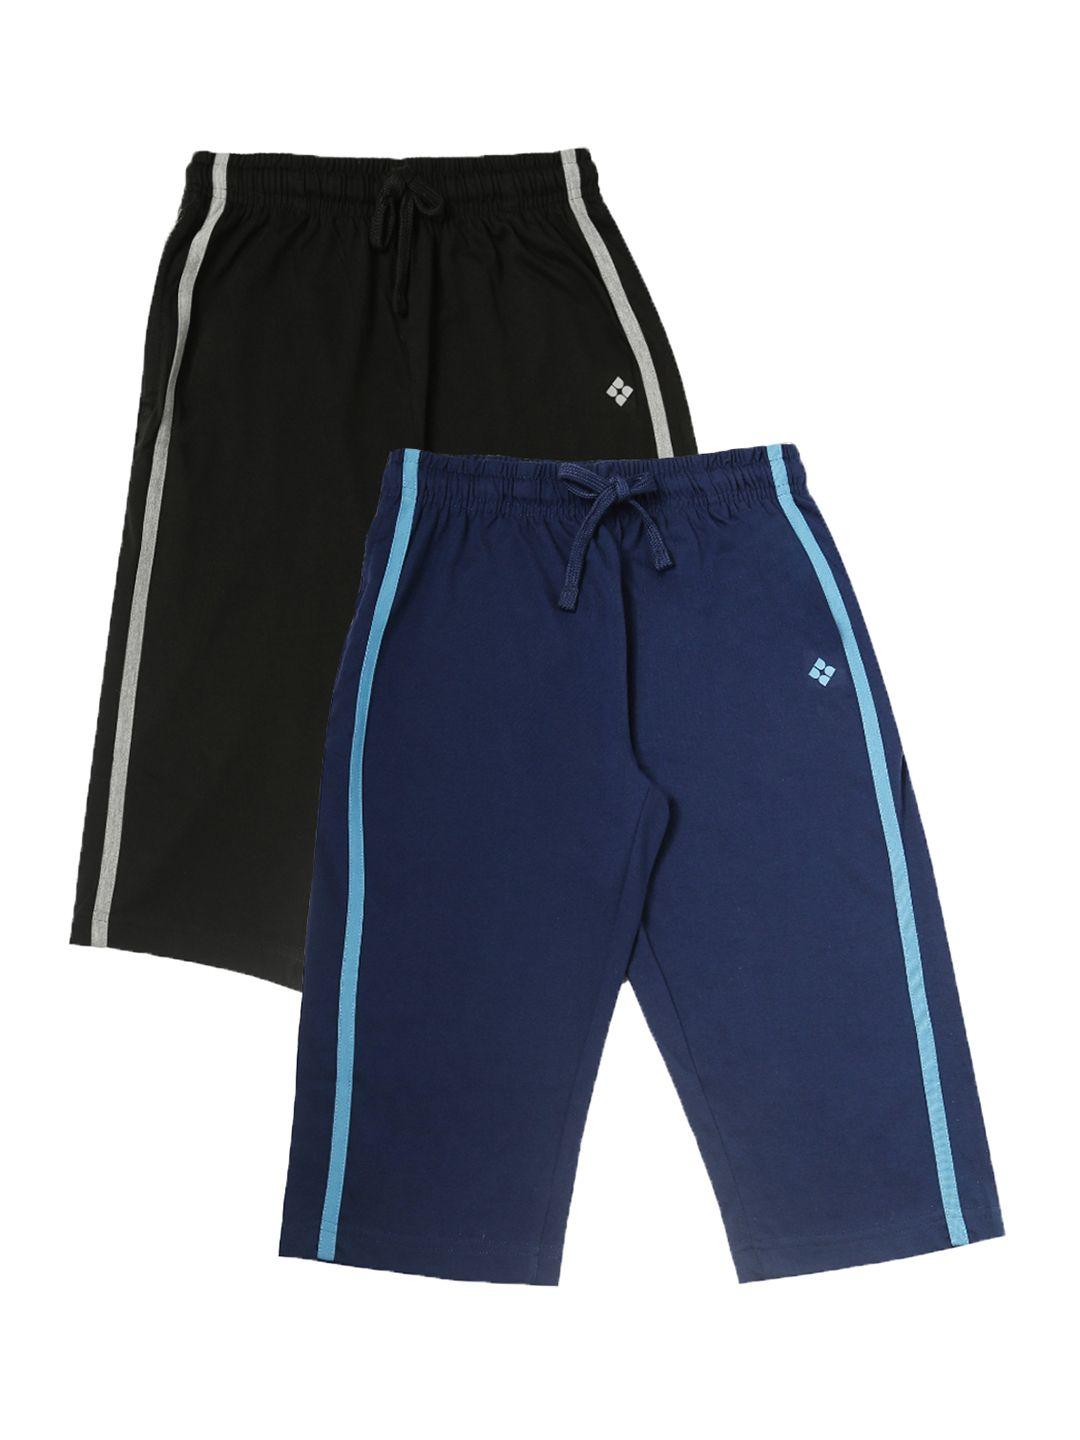 dollar boys black & blue solid set of 2 lounge shorts